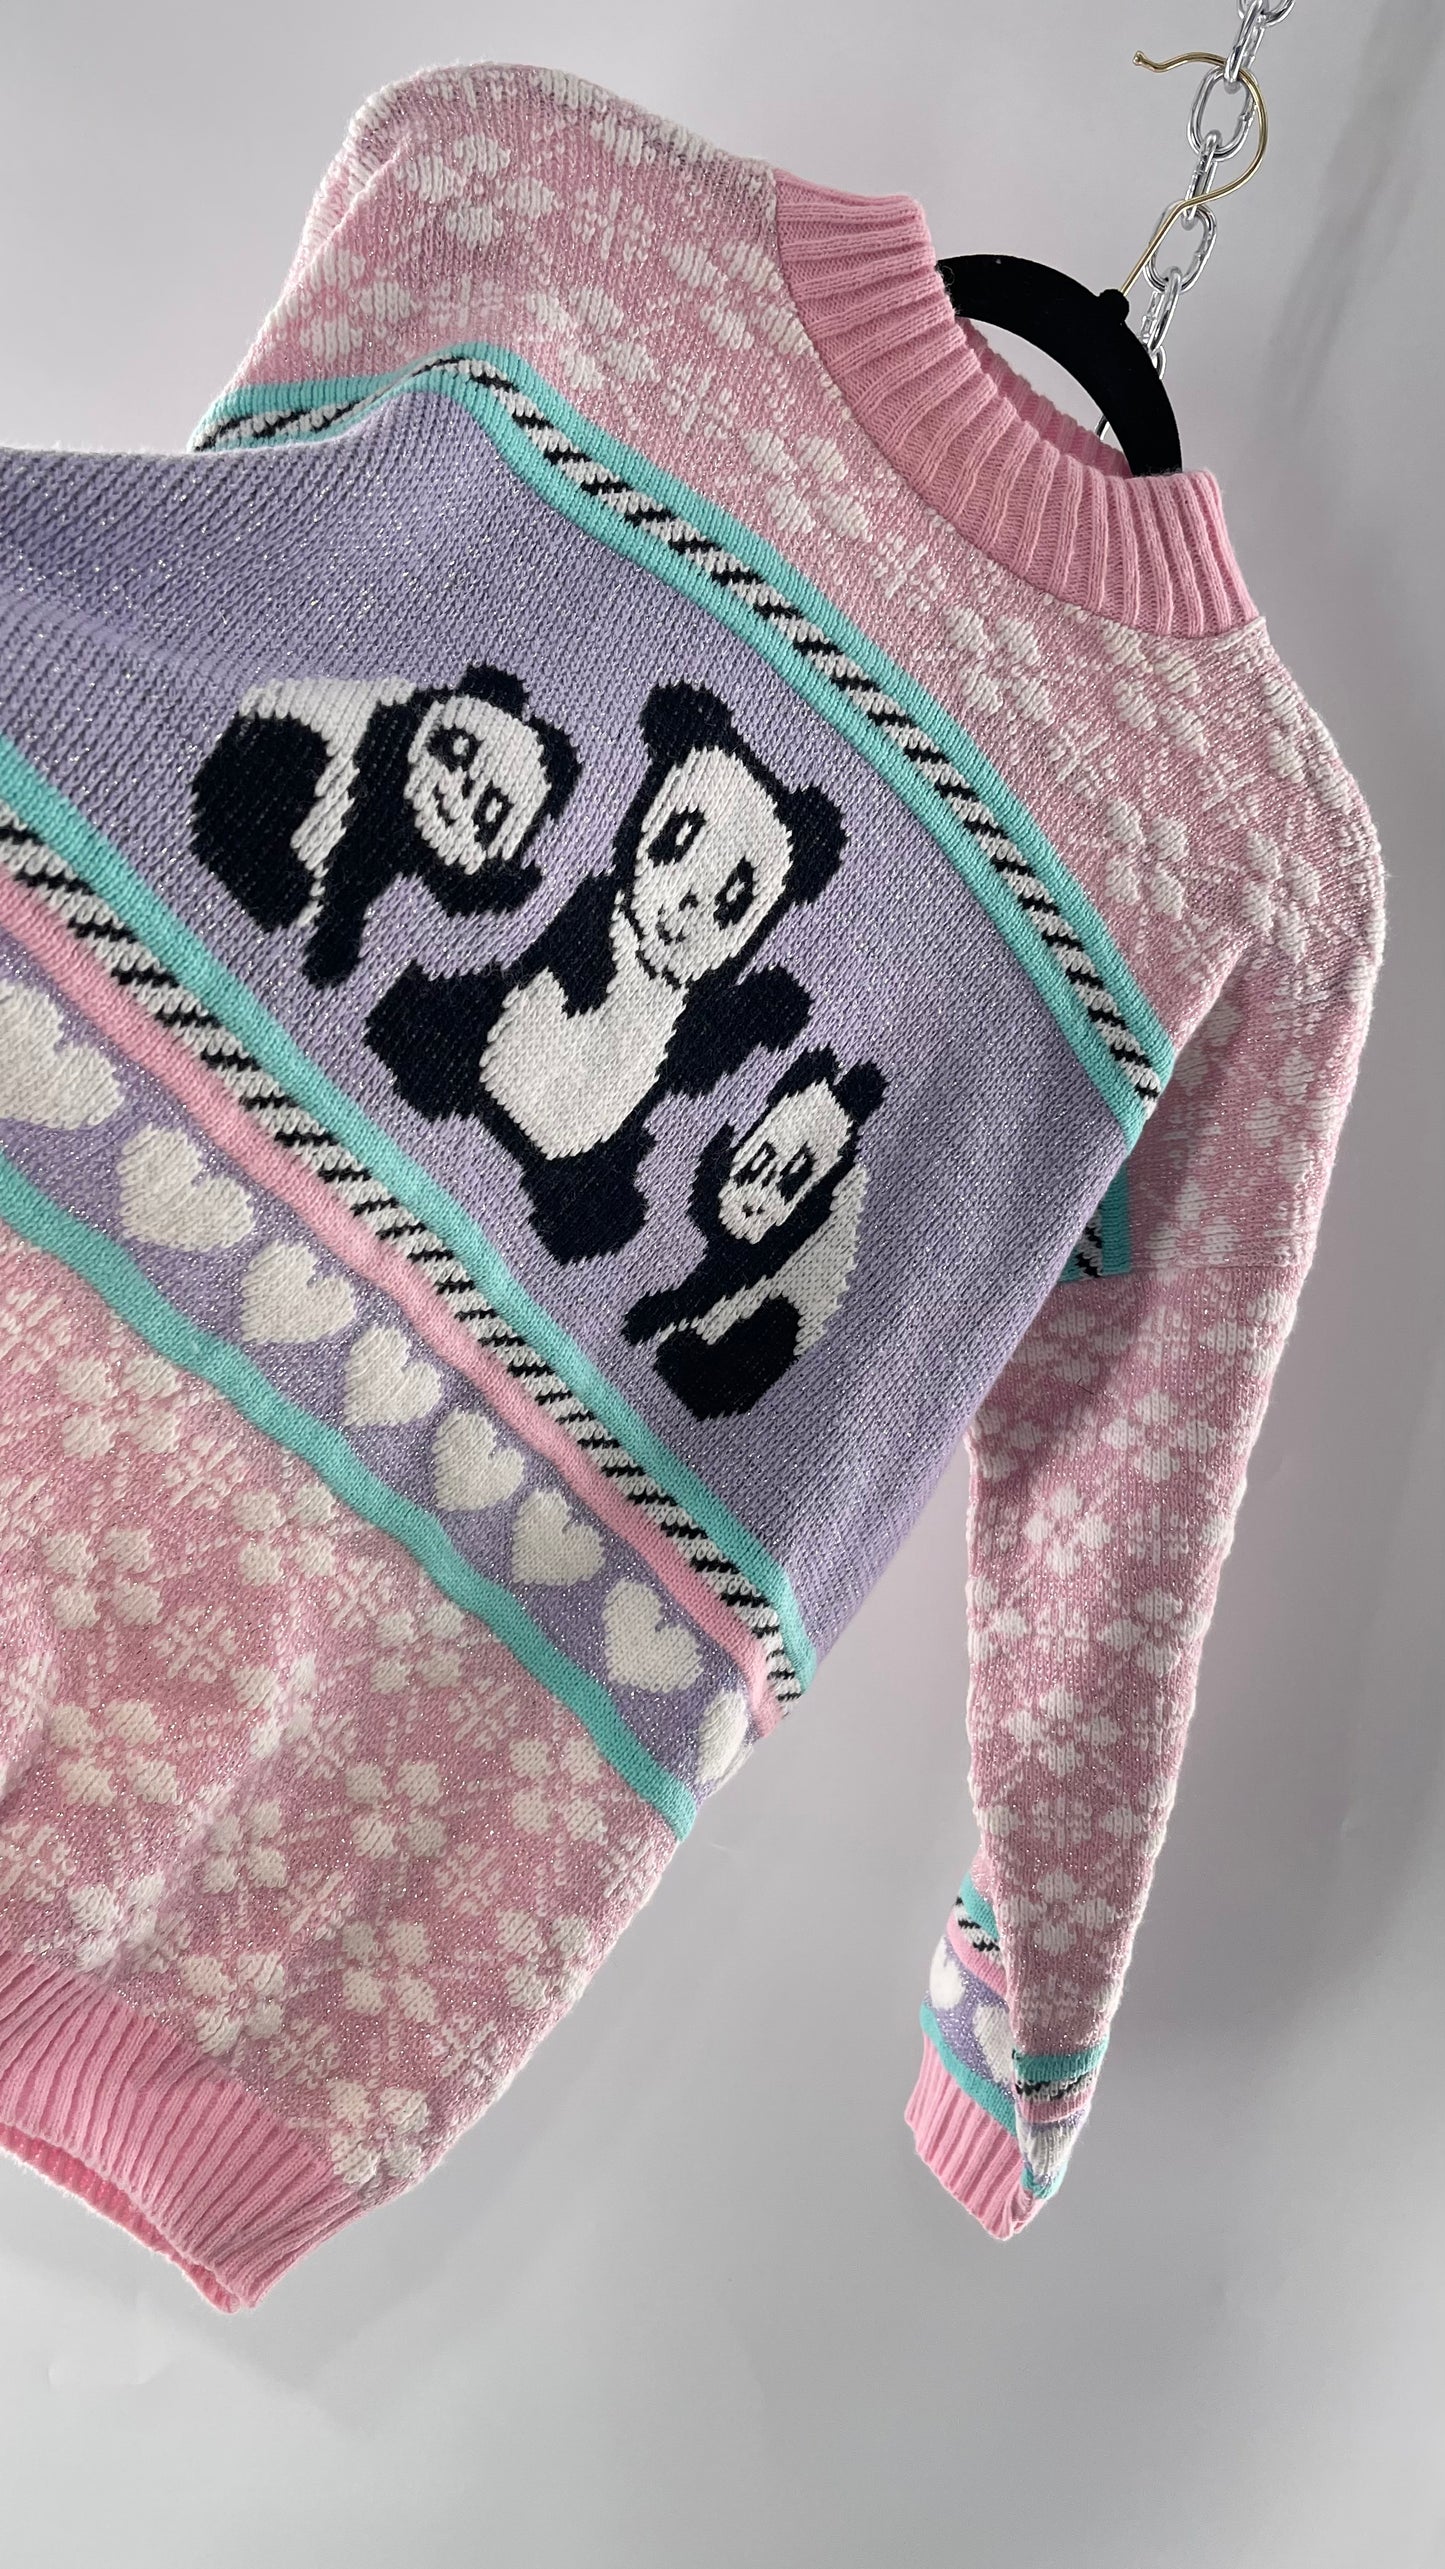 RARE 80s Vintage Adele Pastel Pink, Purple, Mint Silver Tinsel Sweater with Anime/Manga Art Style Pandas (Medium)